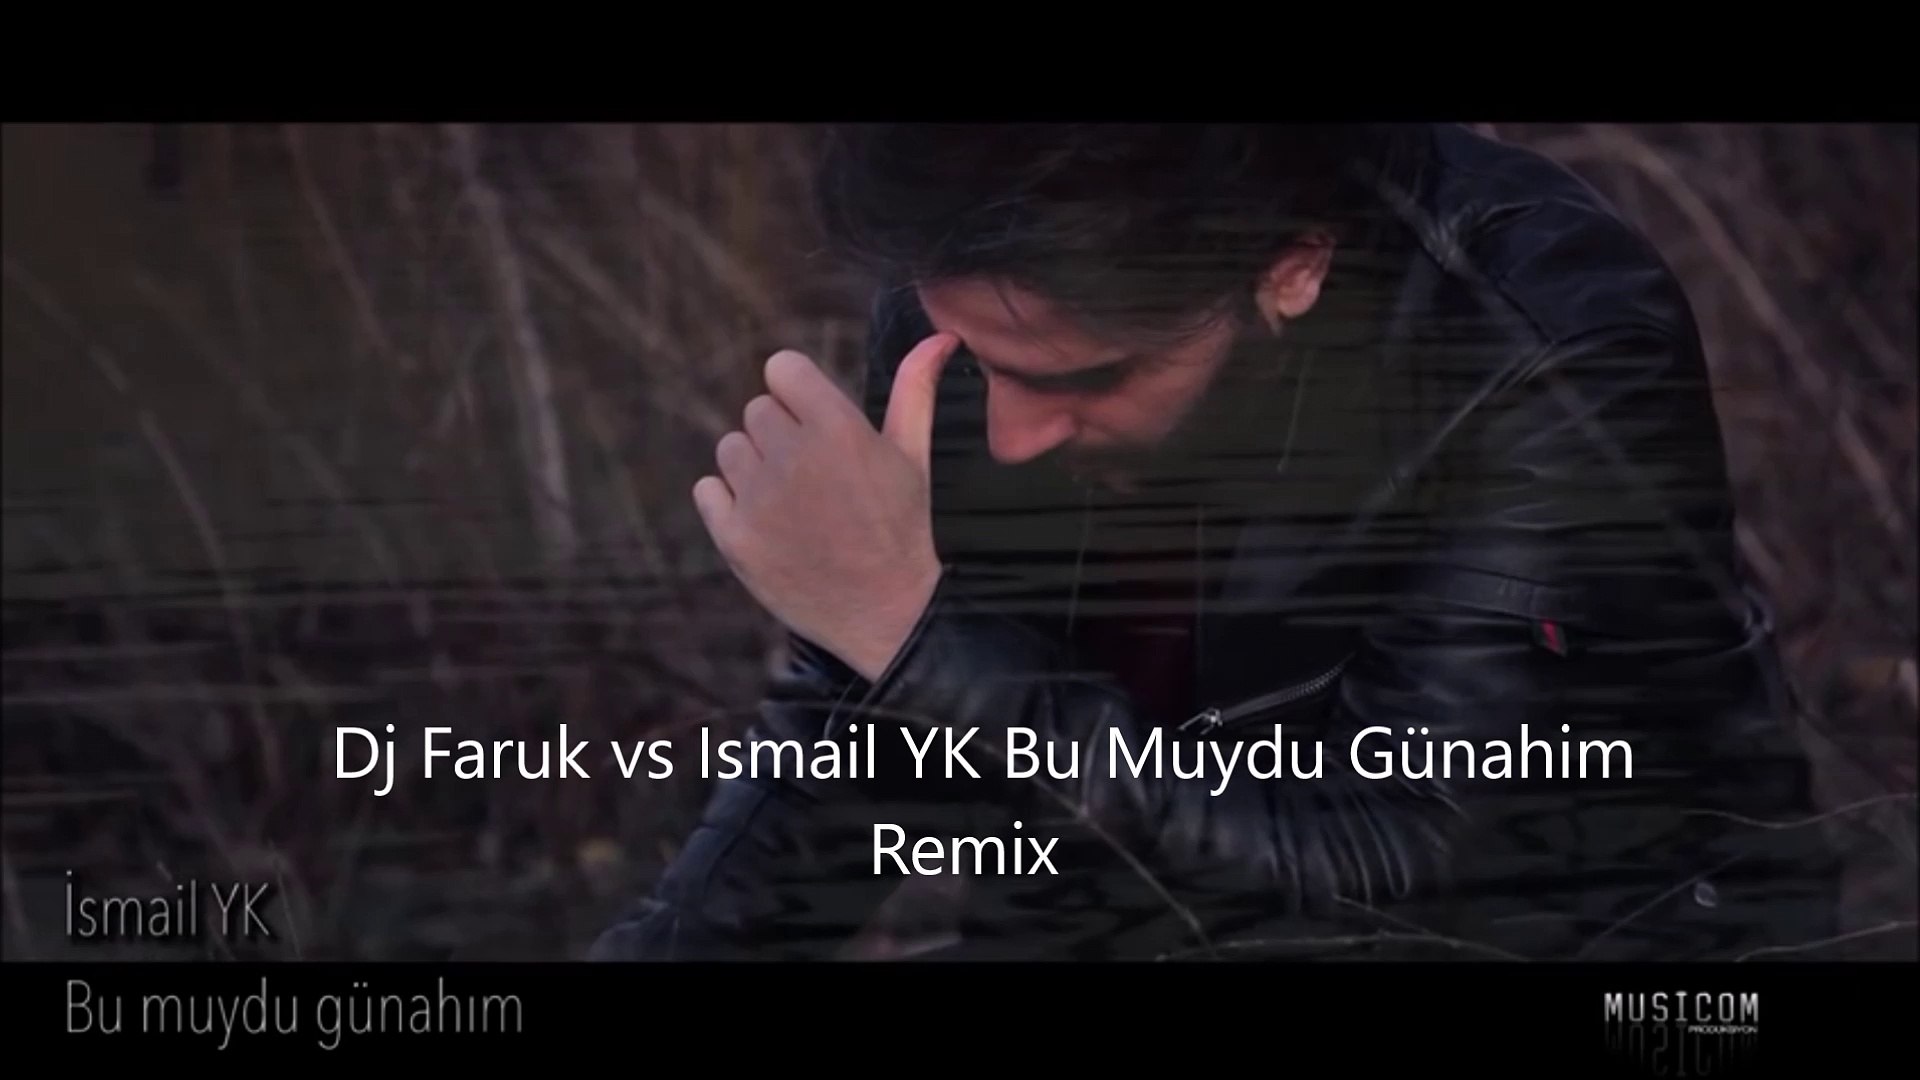 Dj Faruk Vs Ismail Yk Bu Muydu Gunahim Remix Video Dailymotion